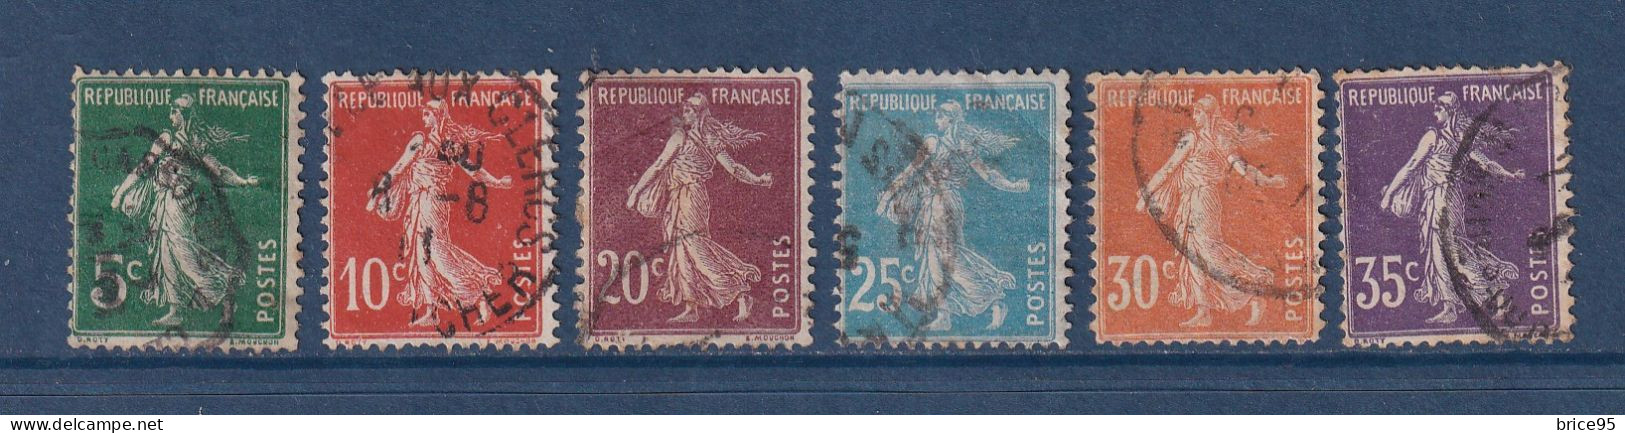 France - YT N° 137 à 142 - Oblitéré - 1907 - Gebruikt